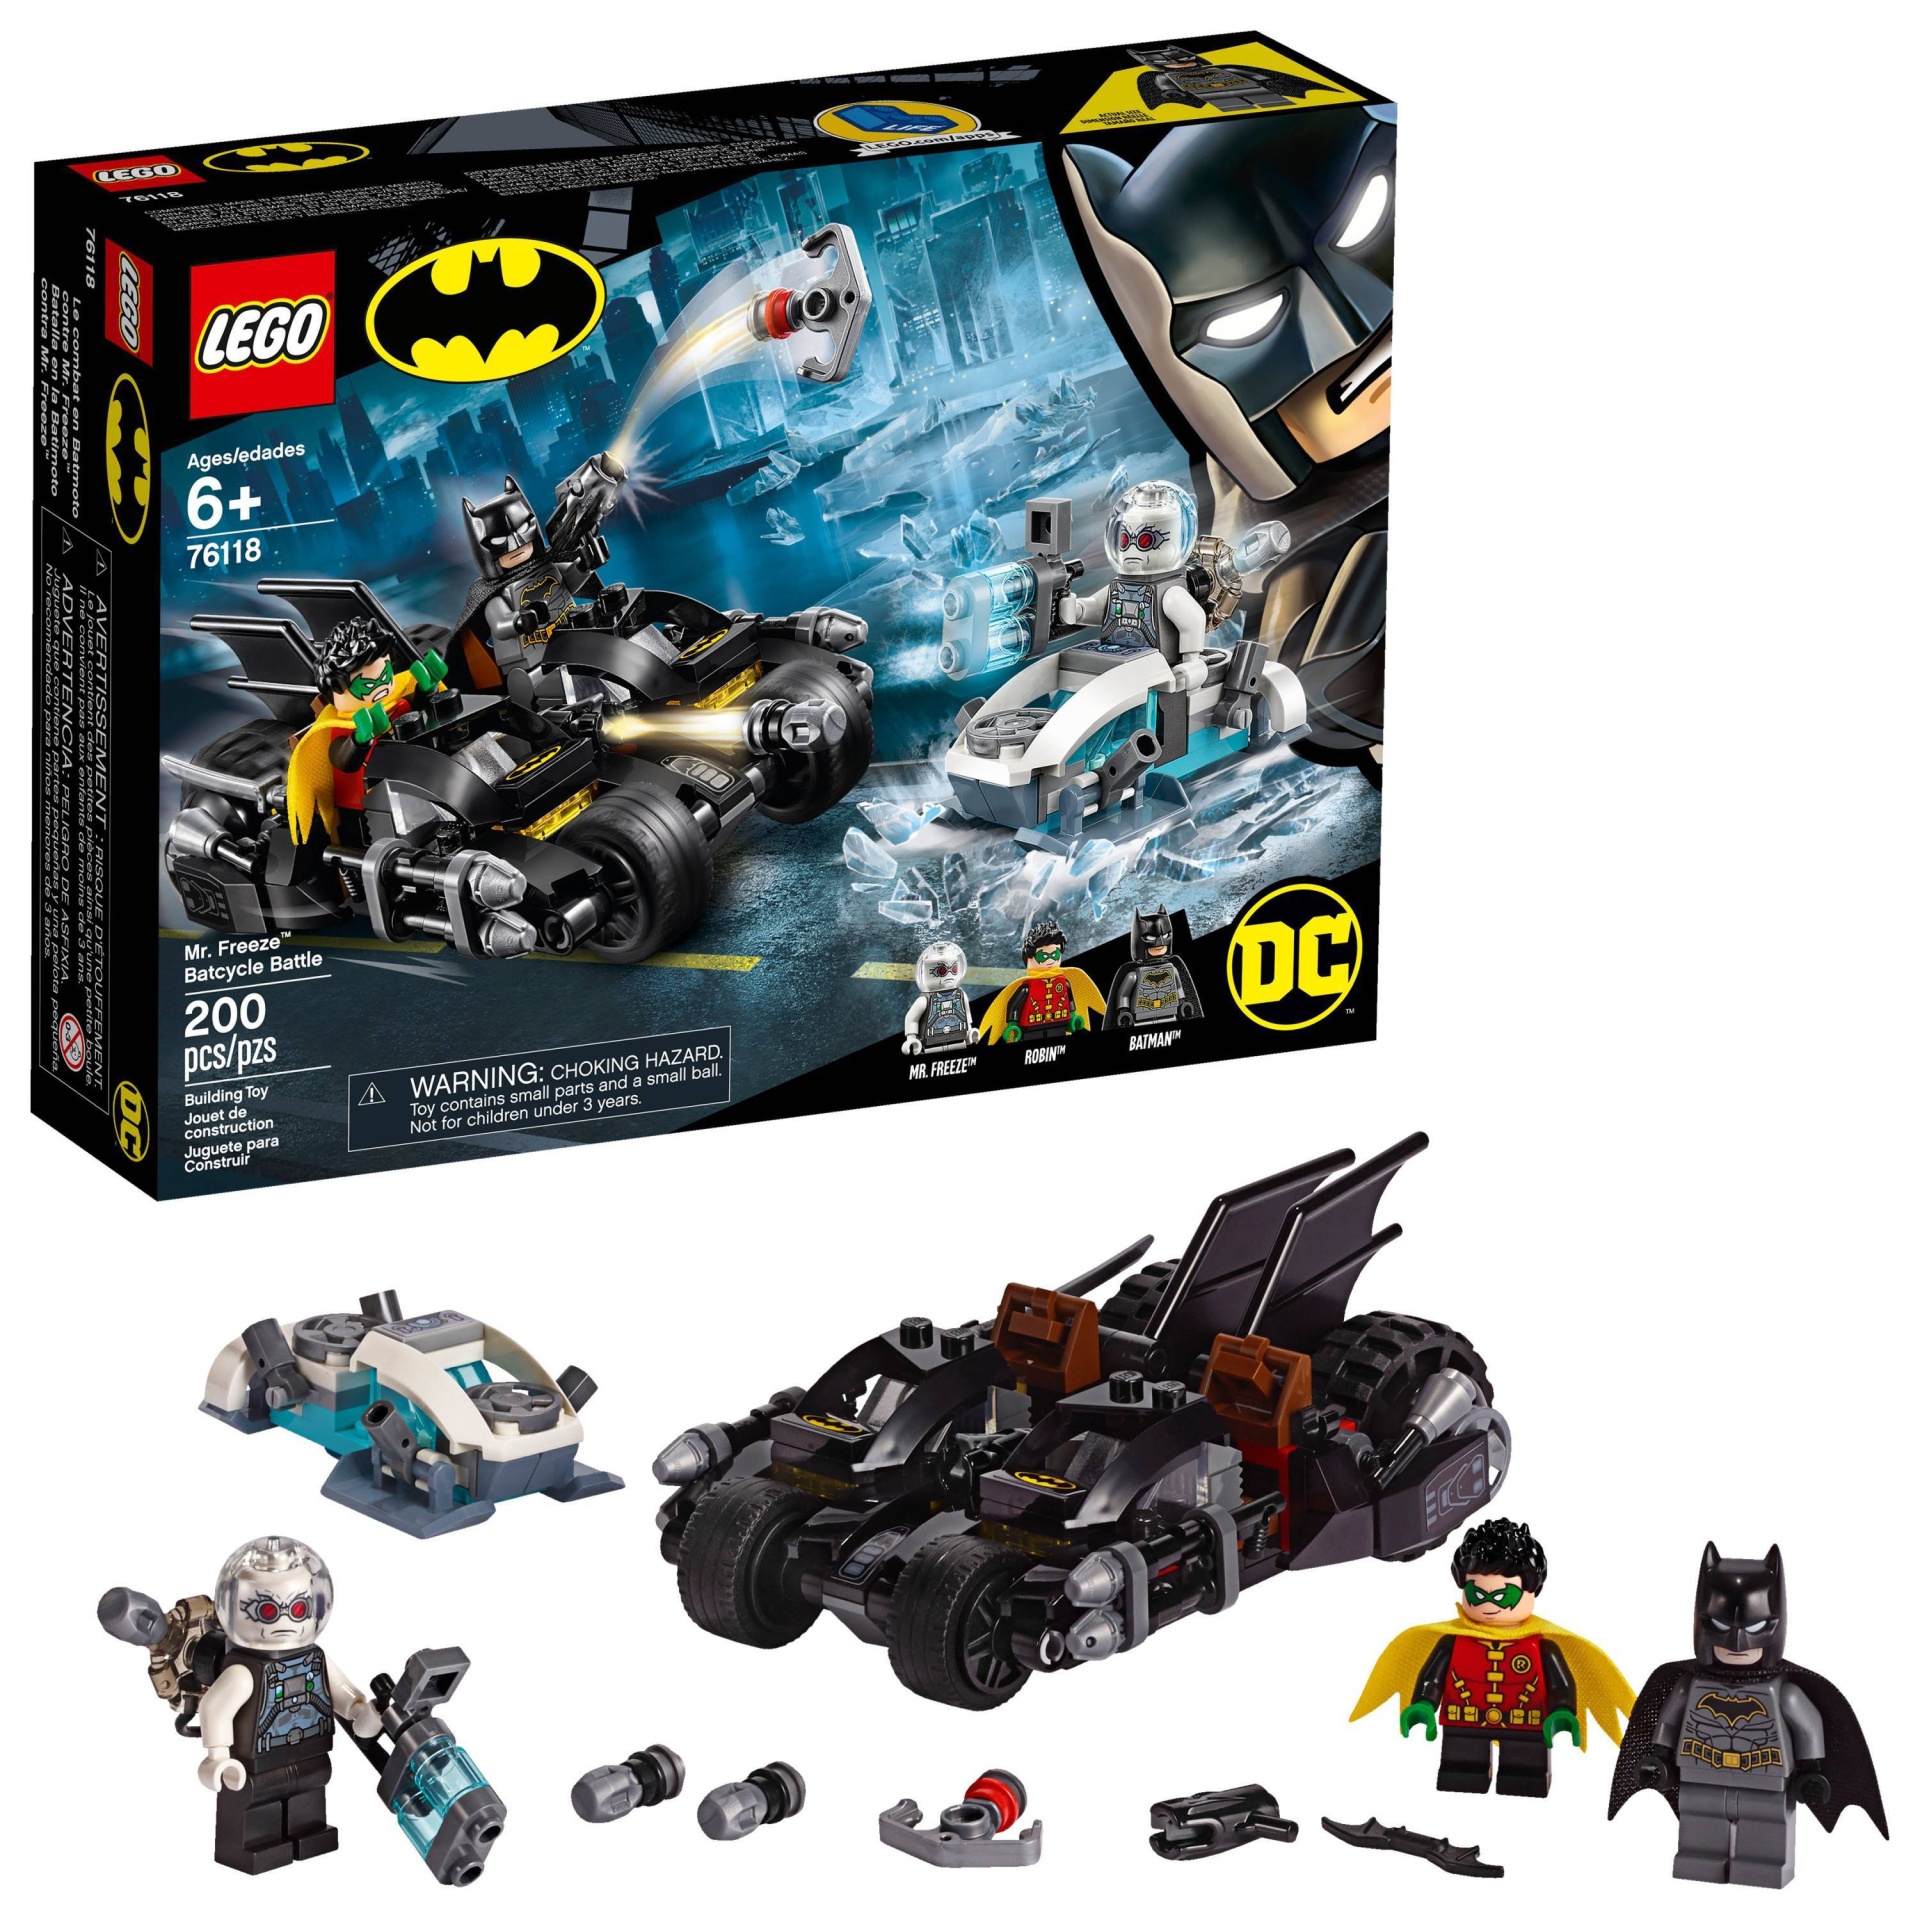 slide 1 of 1, LEGO DC Comics Super Heroes Batman Mr. Freeze Batcycle Battle 76118 Toy Motorcycle Building Set, 200 ct